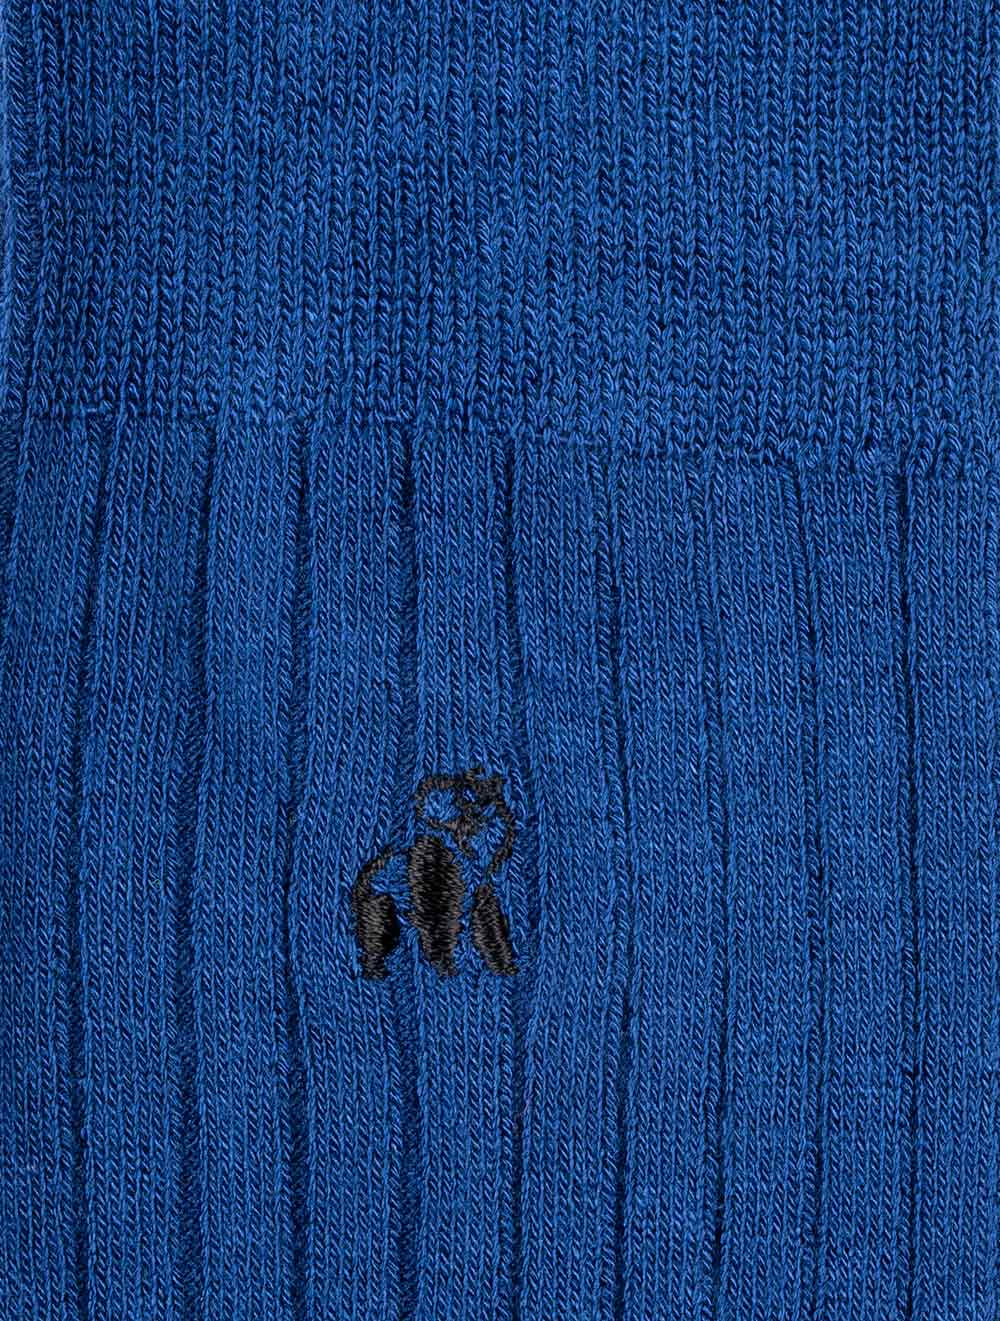 SWOLE PANDA Royal Blue Sock-Blue